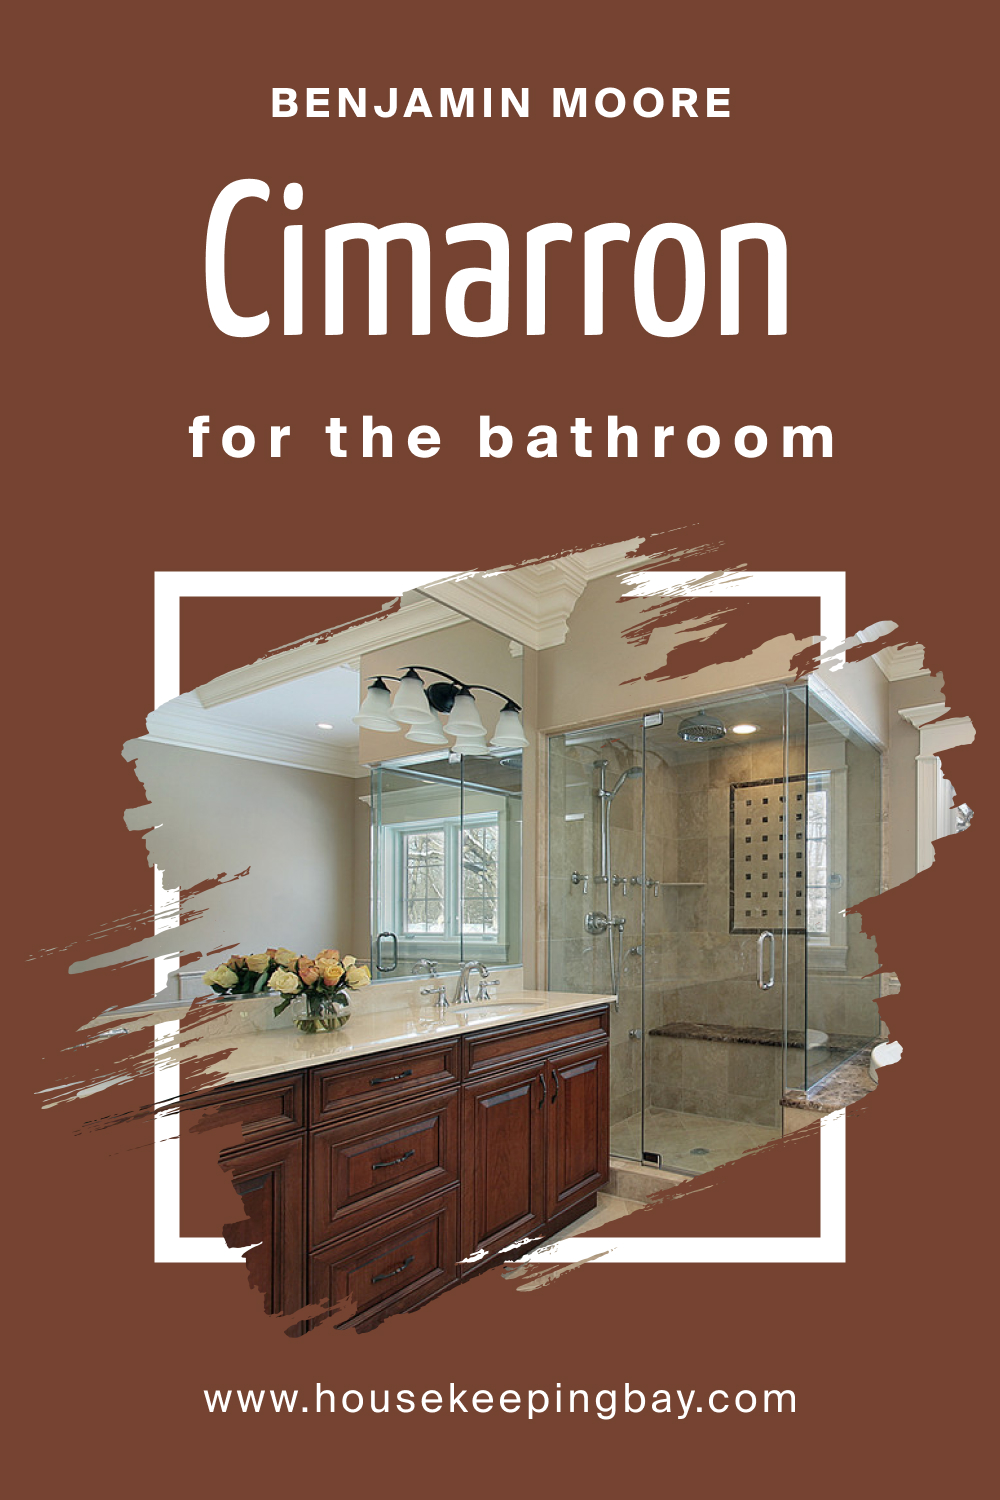 How to Use BM Cimarron 2093-10 in the Bathroom?